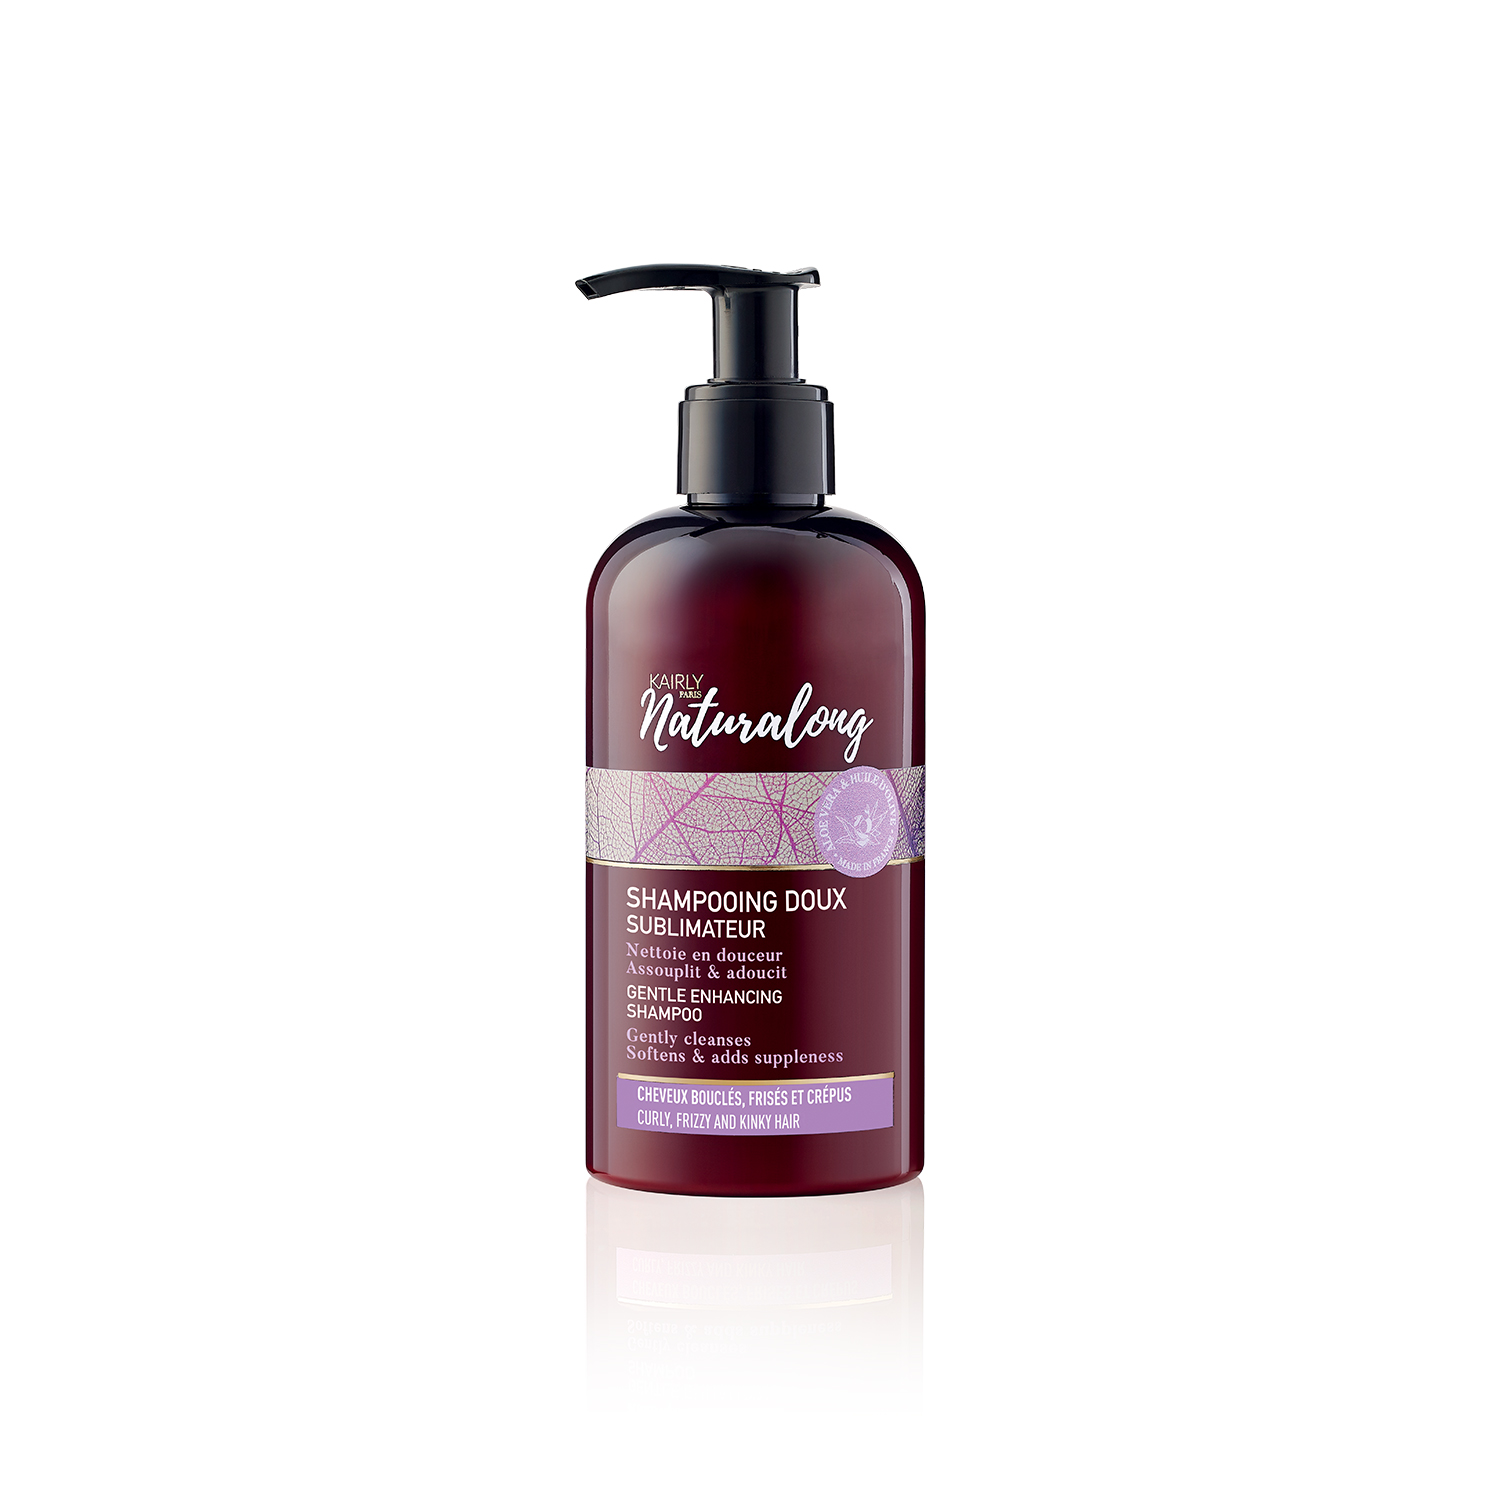 Gentle Enhancing Shampoo | NATURALONG